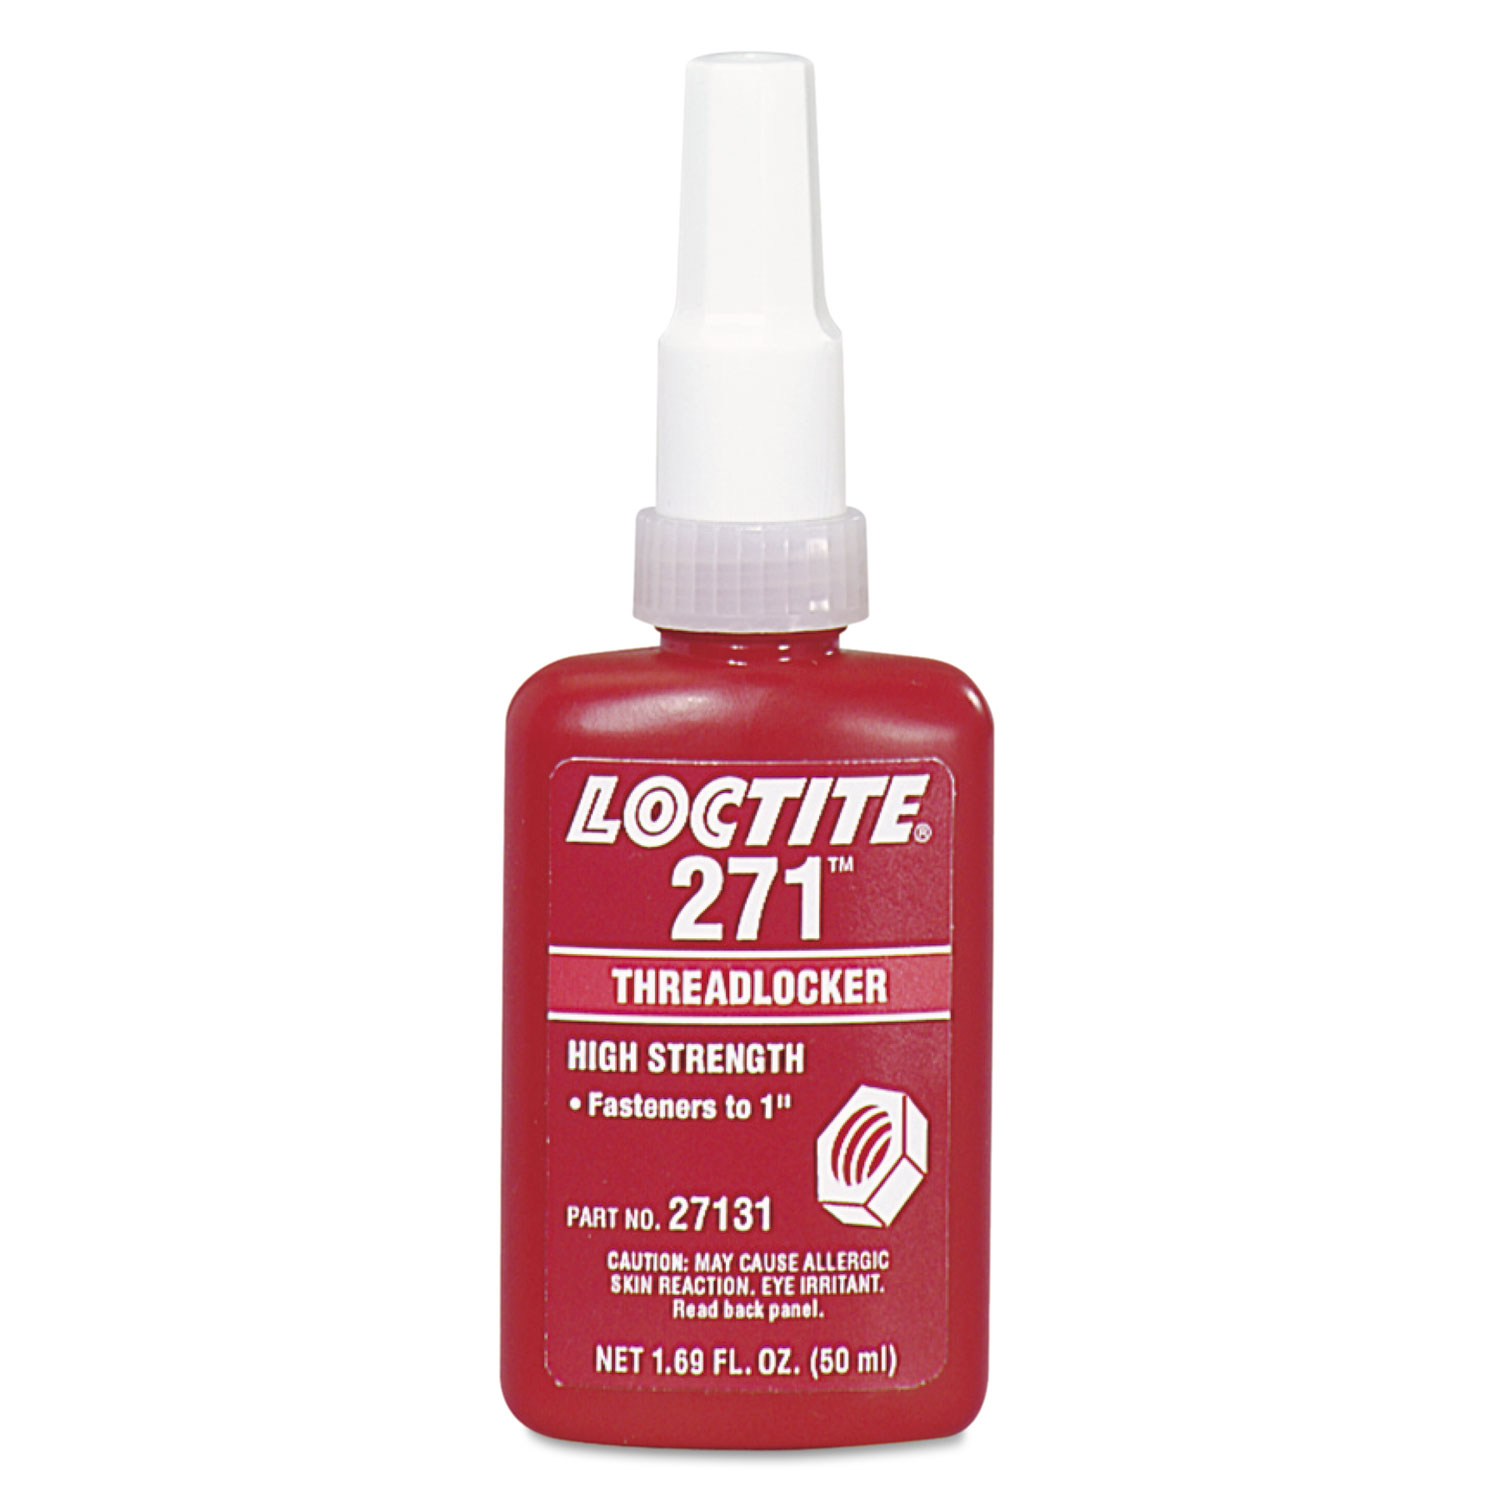  Loctite 135381 271 Threadlocker, High Strength, 50 mL, Red (LOC27131) 